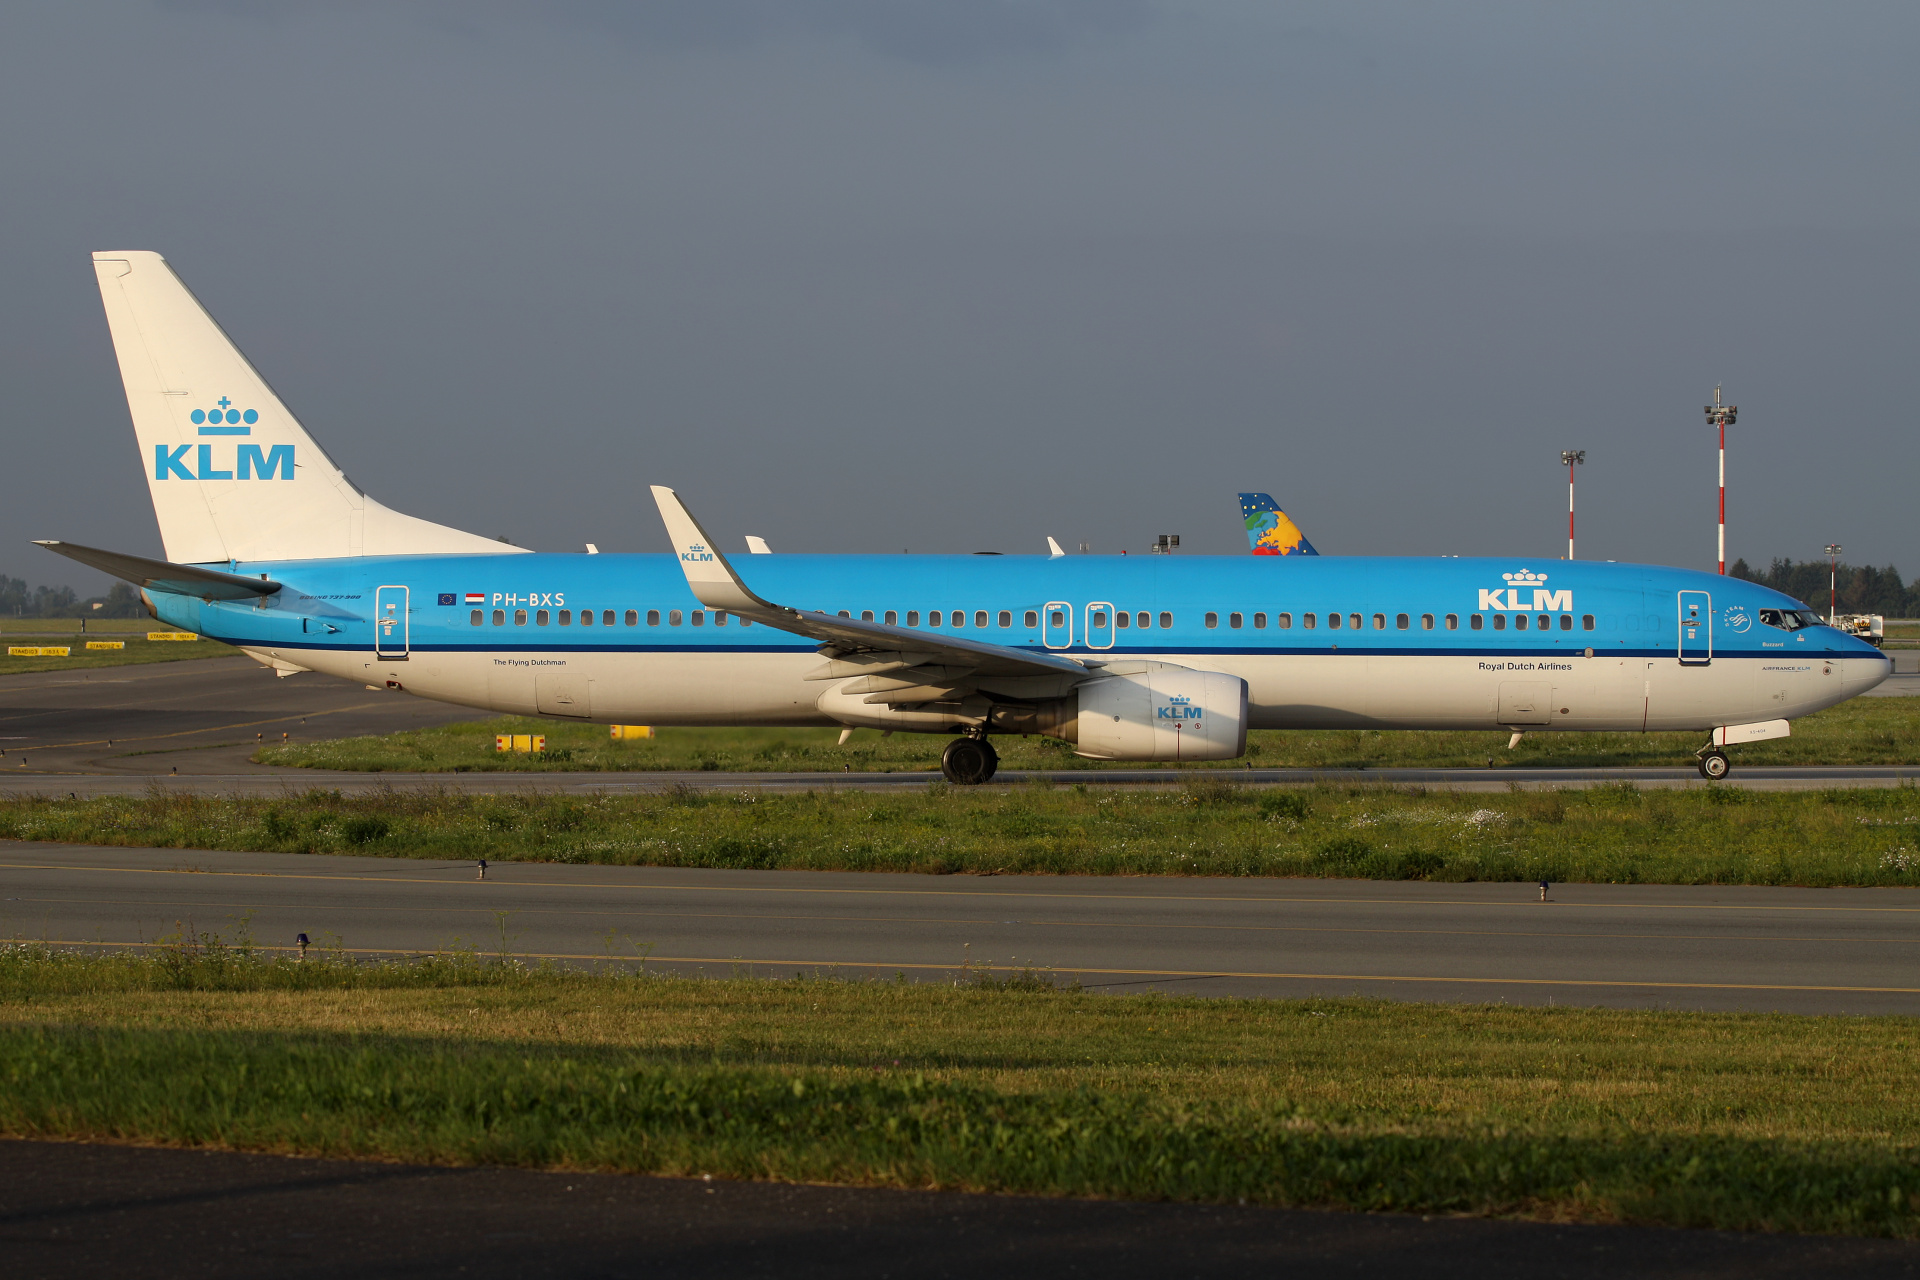 PH-BXS (Aircraft » EPWA Spotting » Boeing 737-900 » KLM Royal Dutch Airlines)